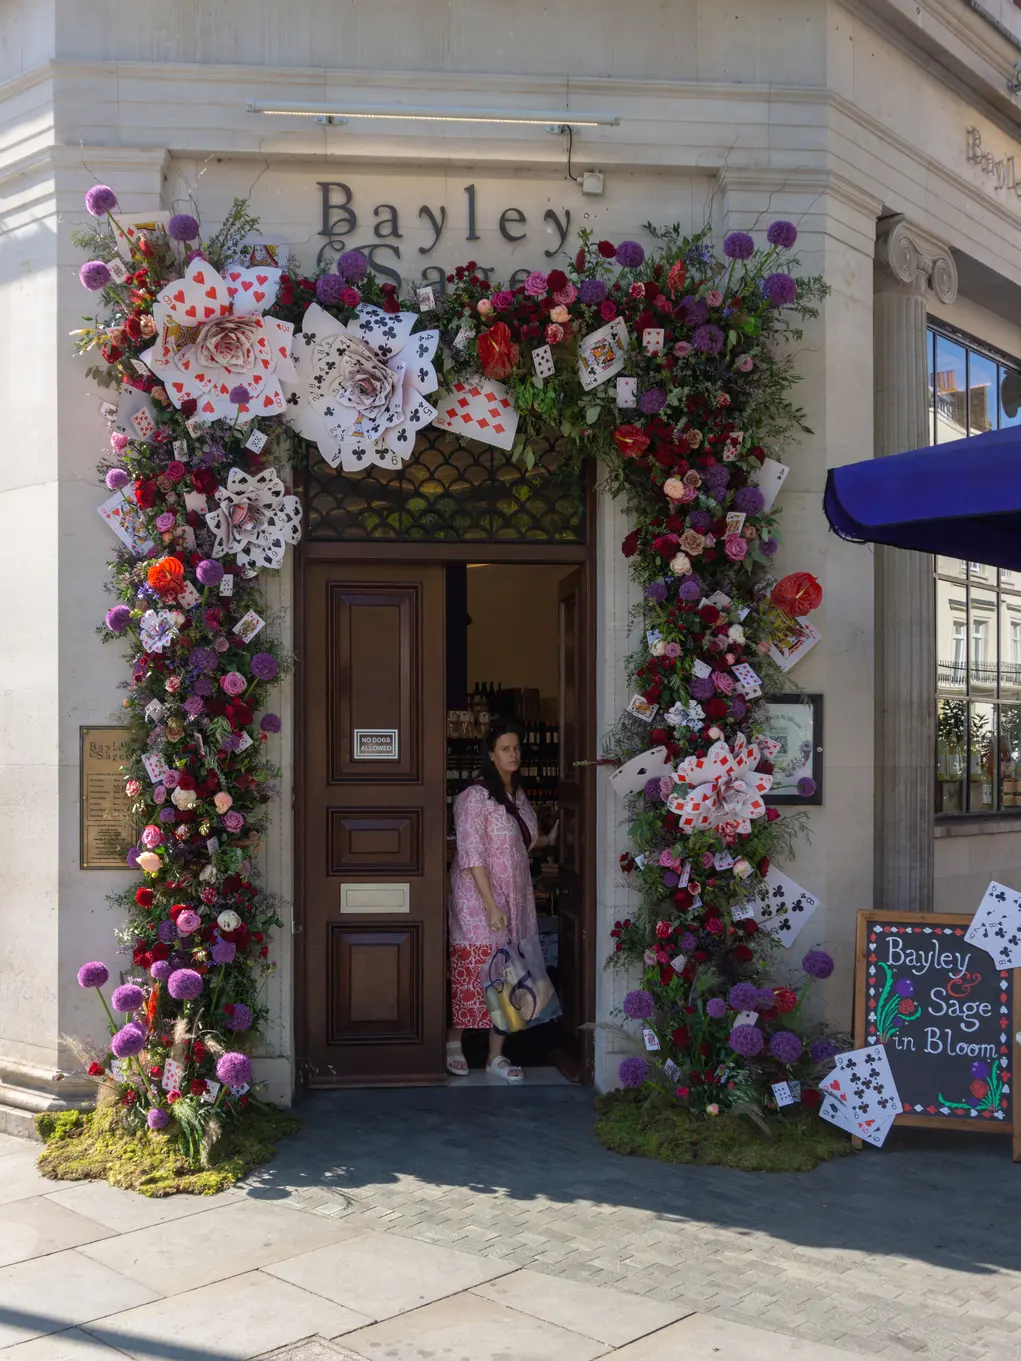 Bayley and Sage shopfront